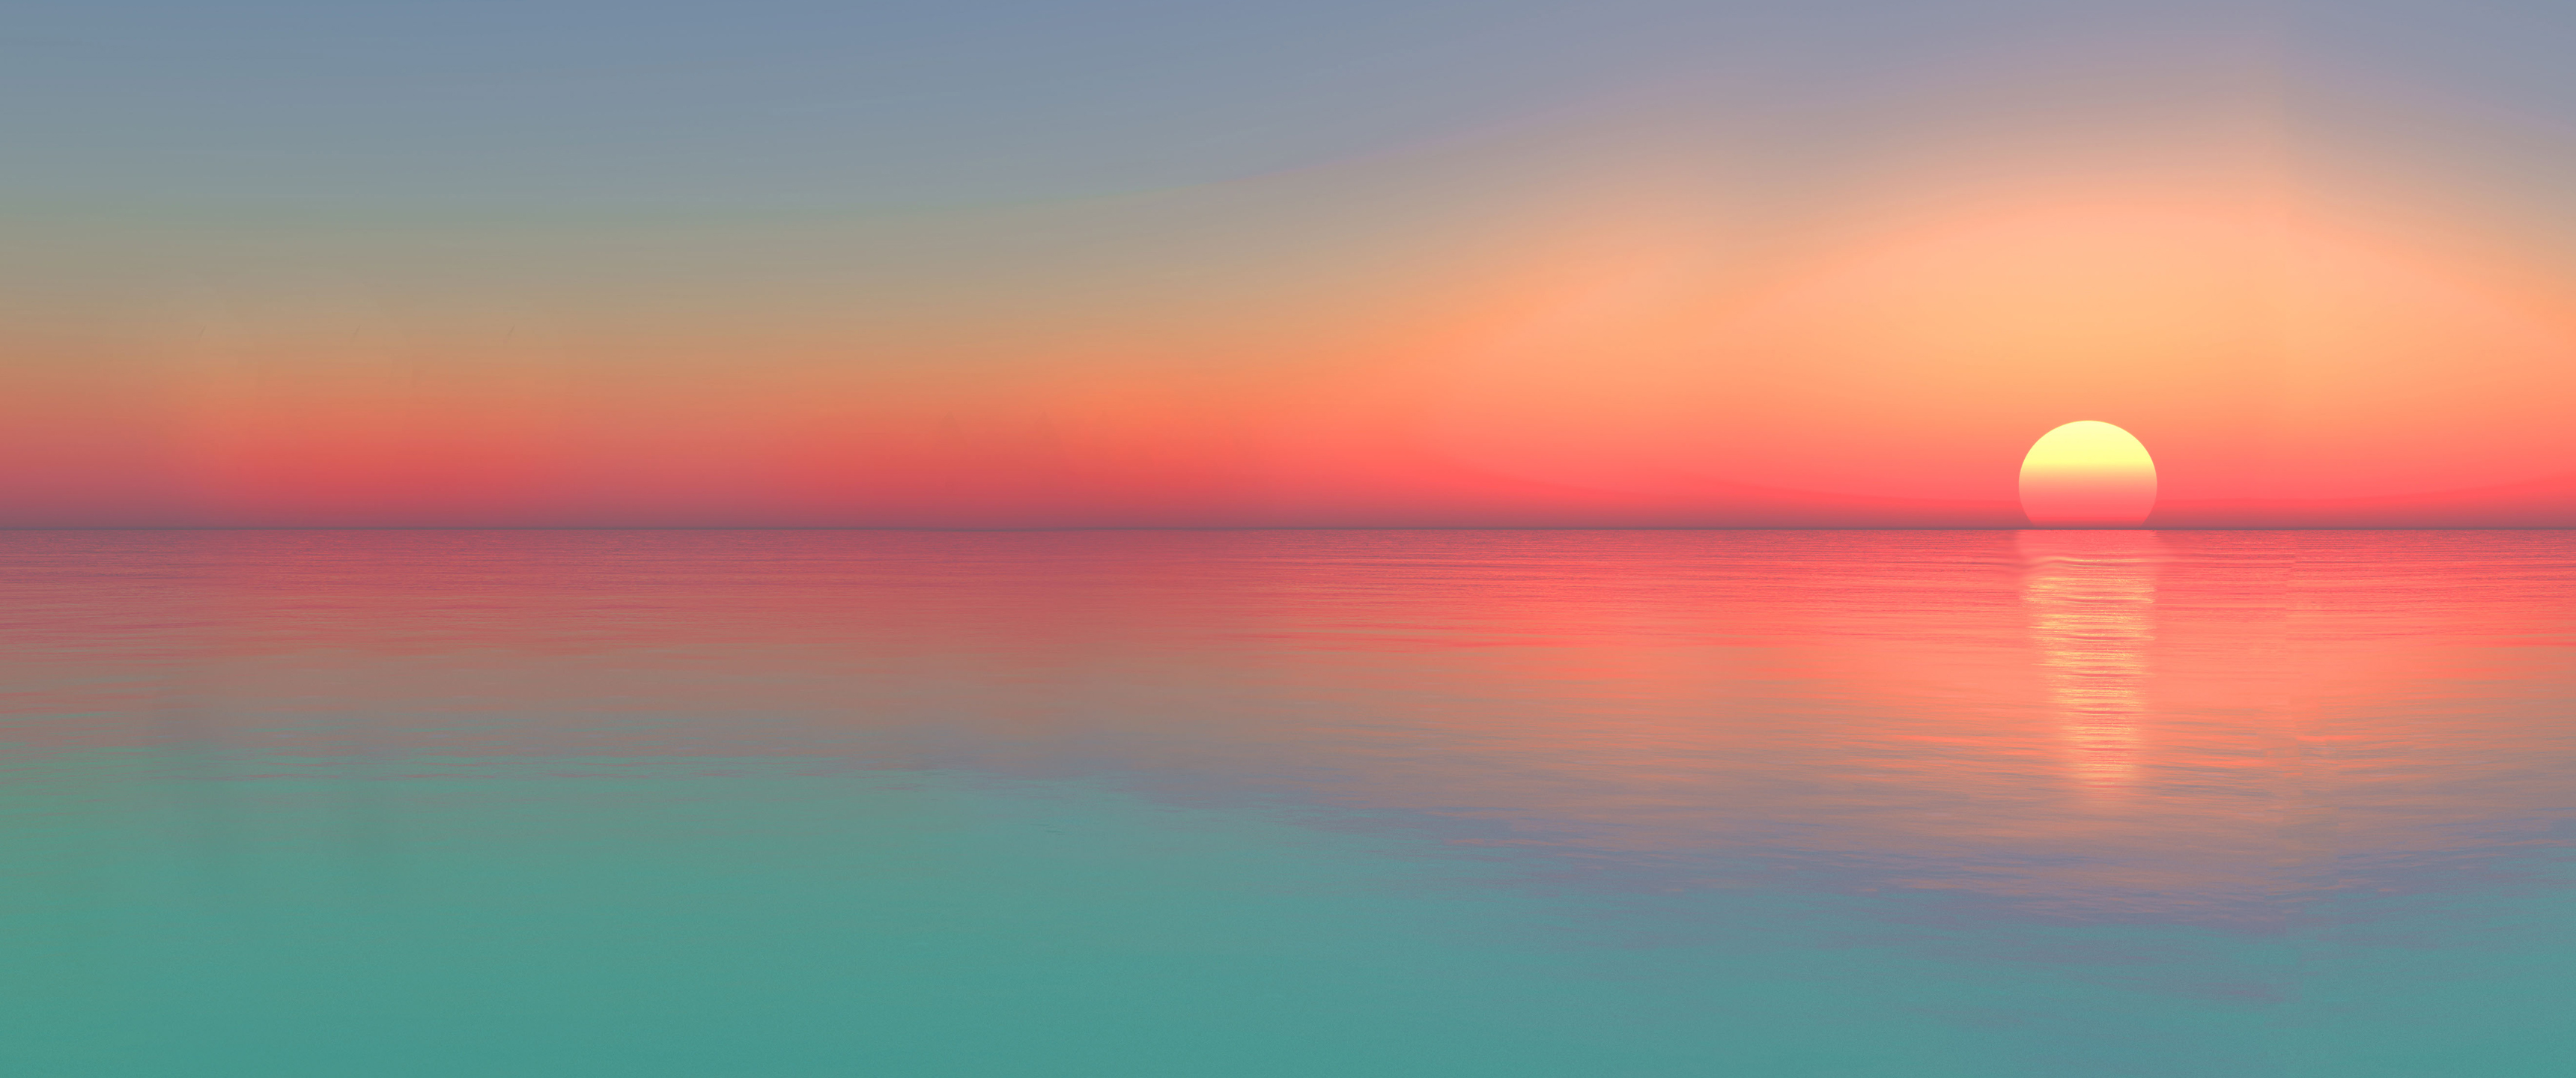 Sea Sunset Horizon Dusk Calm Waters 3440x1440